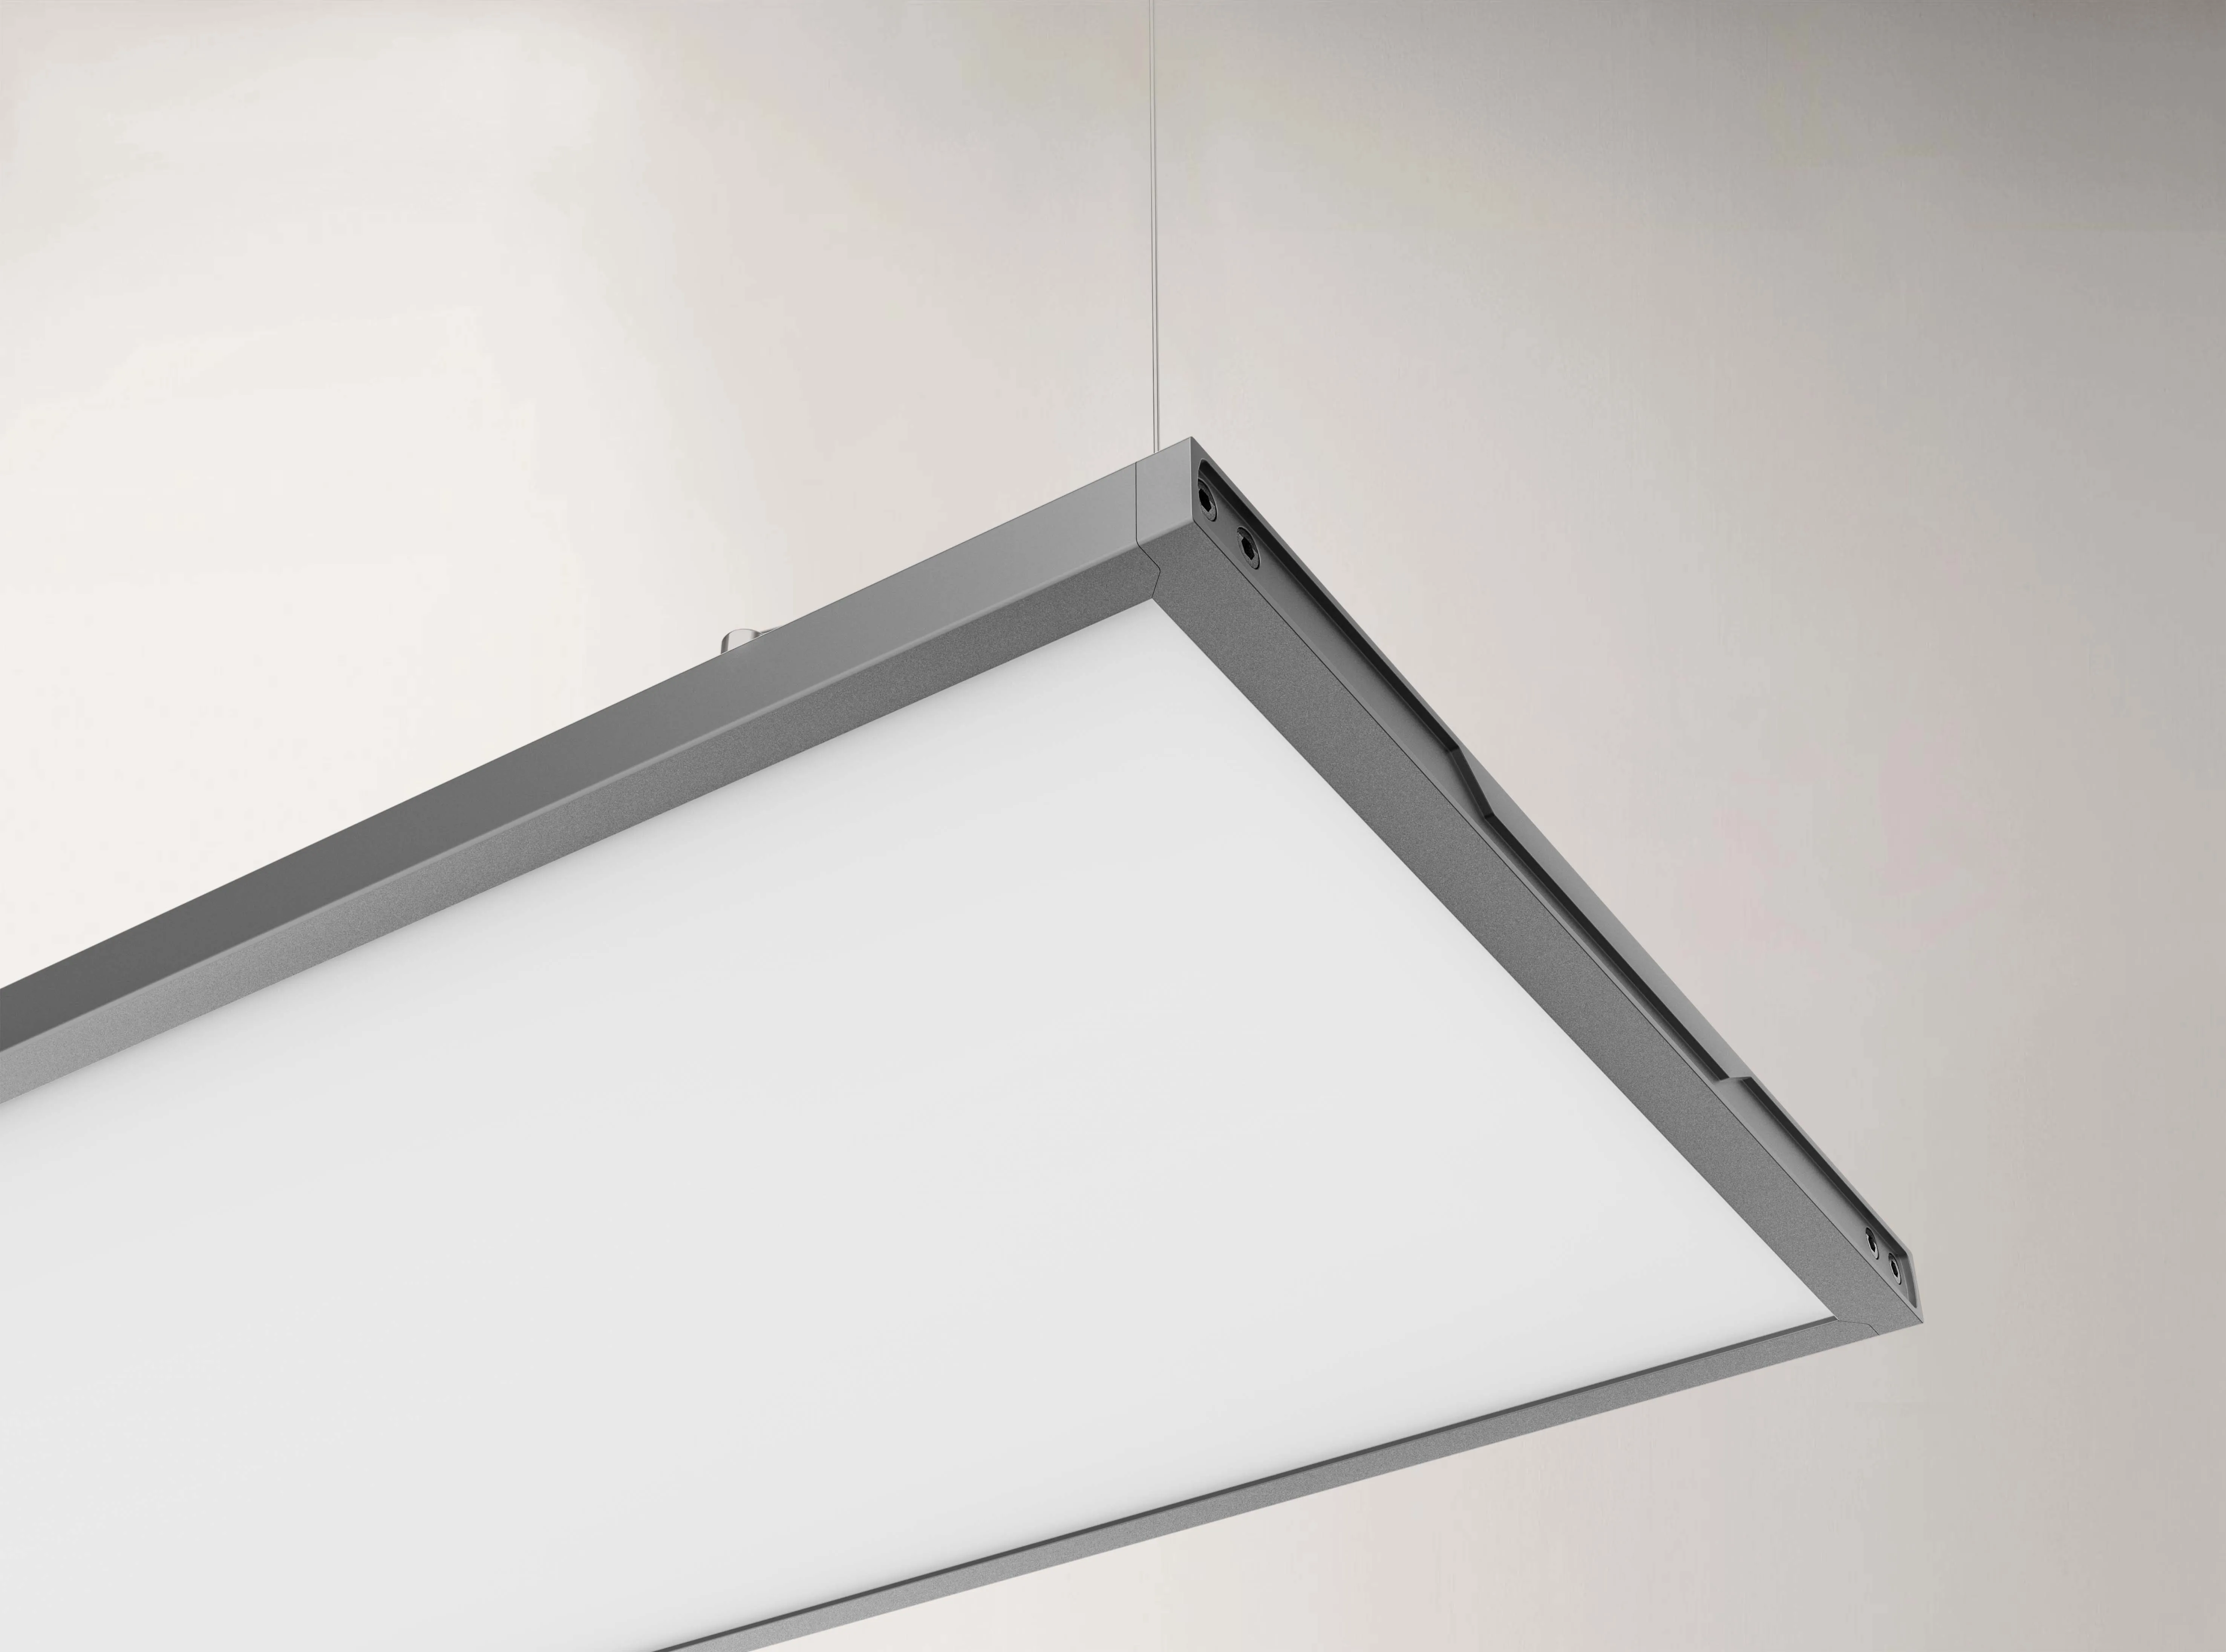 Inlity Flat Lamp Lighting 36w 5000K Square Led Panel Light PLUS Hot Selling lighting led pendant For the office